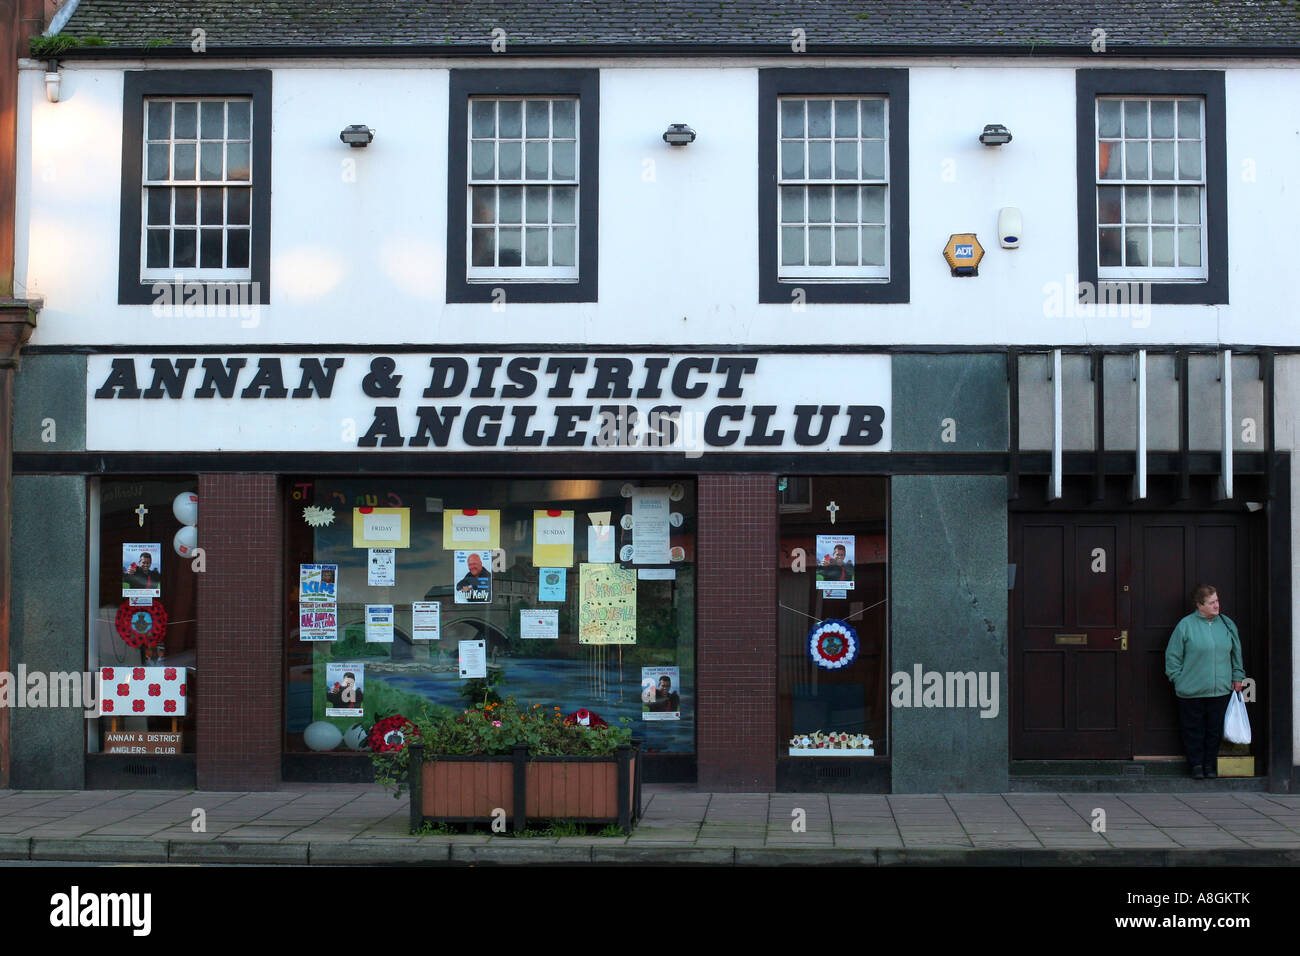 [Annan & District Anglers Club Building in Annan Scotland] Stock Photo